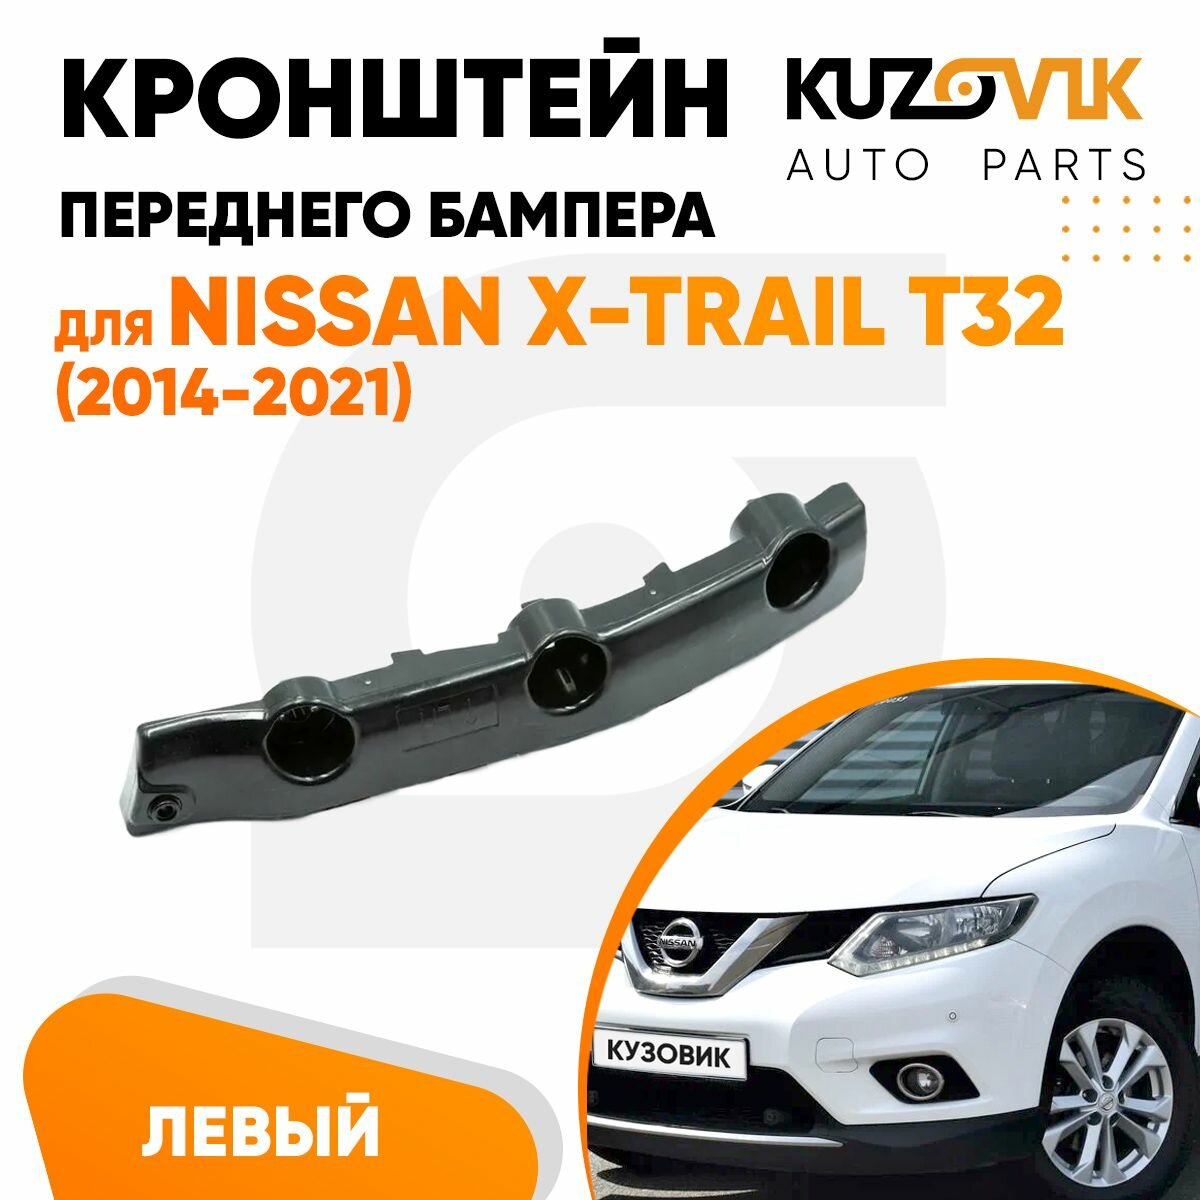 Кронштейн крепление переднего бампера левый для Ниссан Икс-Трейл Nissan X-Trail T32 (2014-2021)